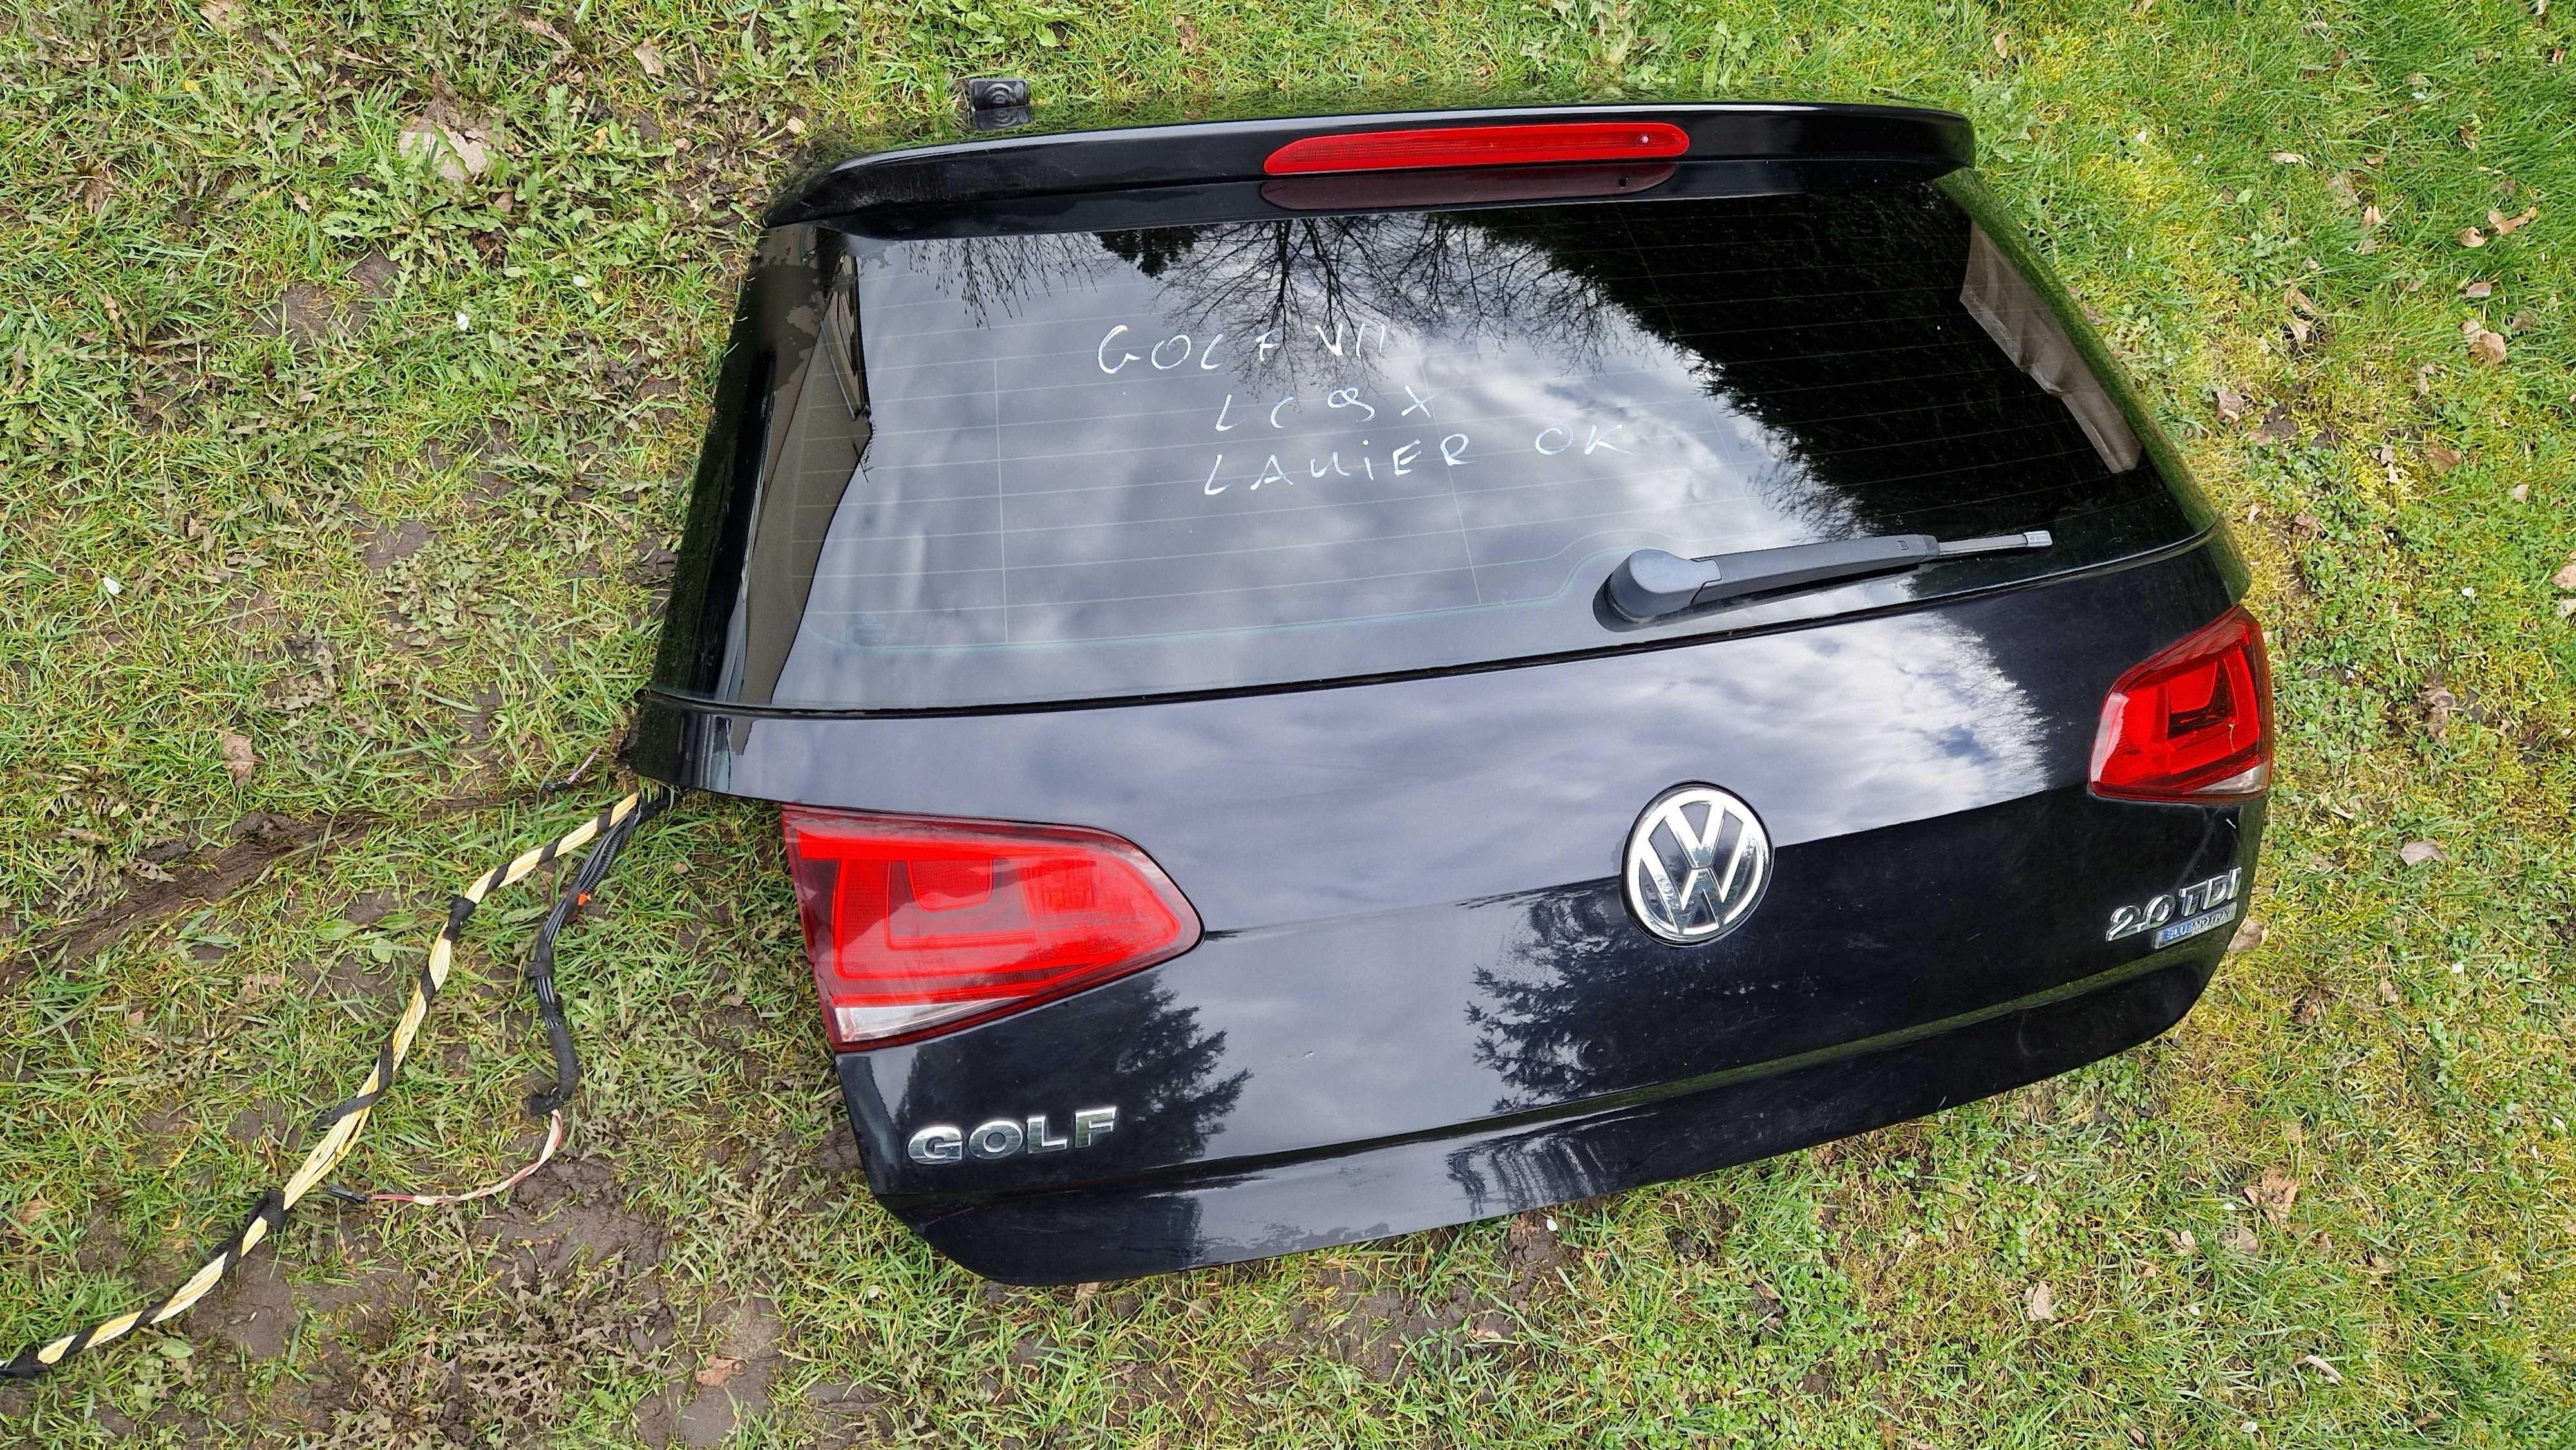 VW Golf 7 maska zderzak drzwi hb lc9x klapa lampa silnik crb skrzynia